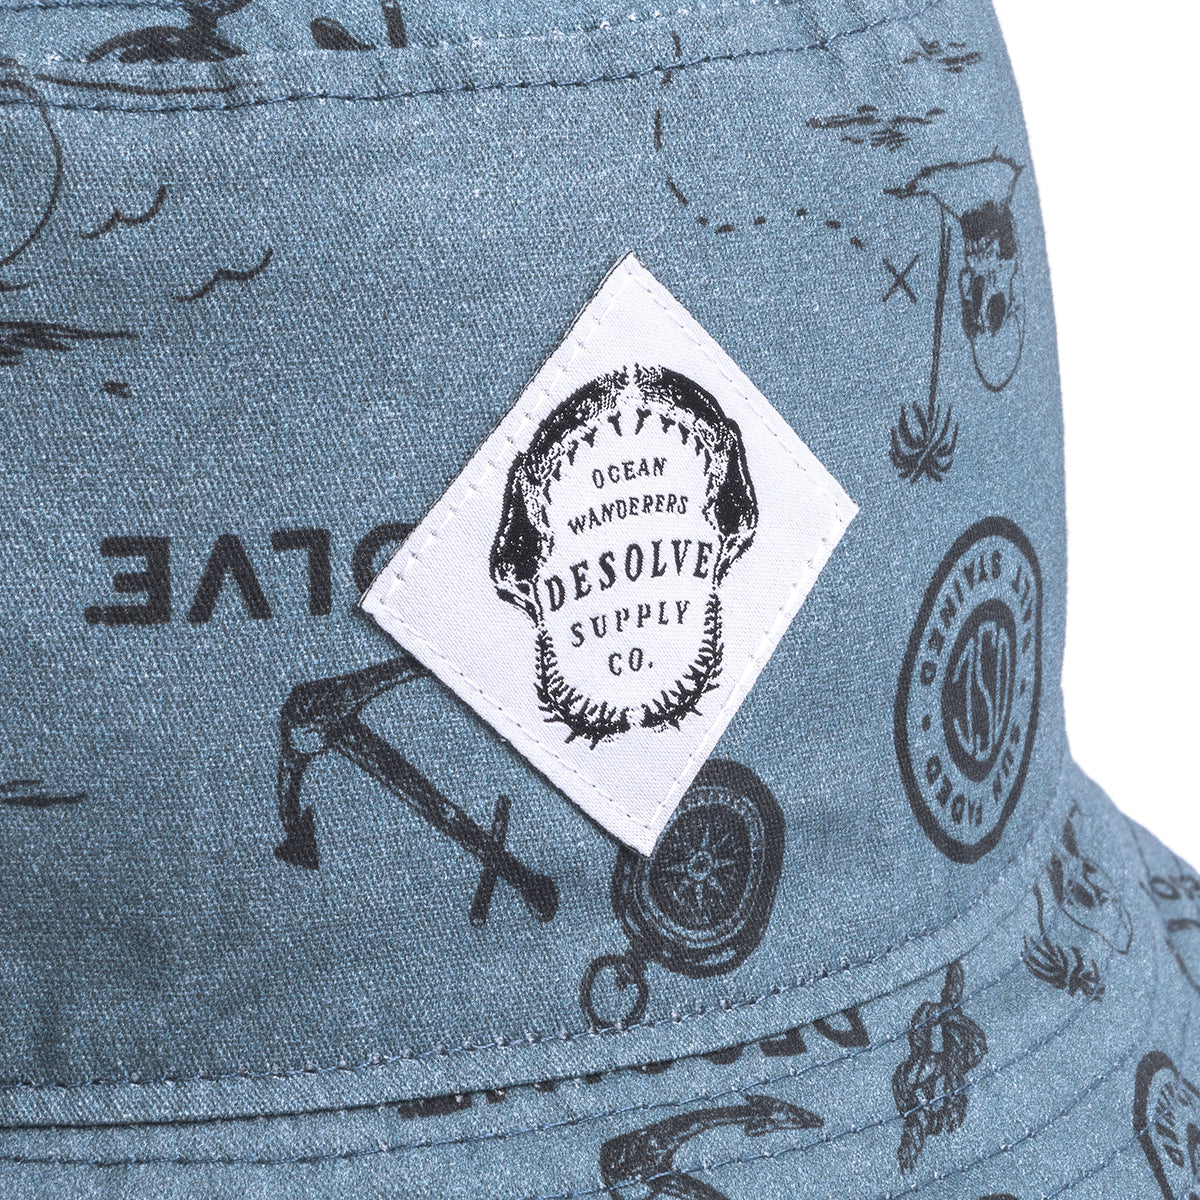 Headwear, Desolve, Caps, Bucket Hats & Beanies NZ - Desolve Supply Co.